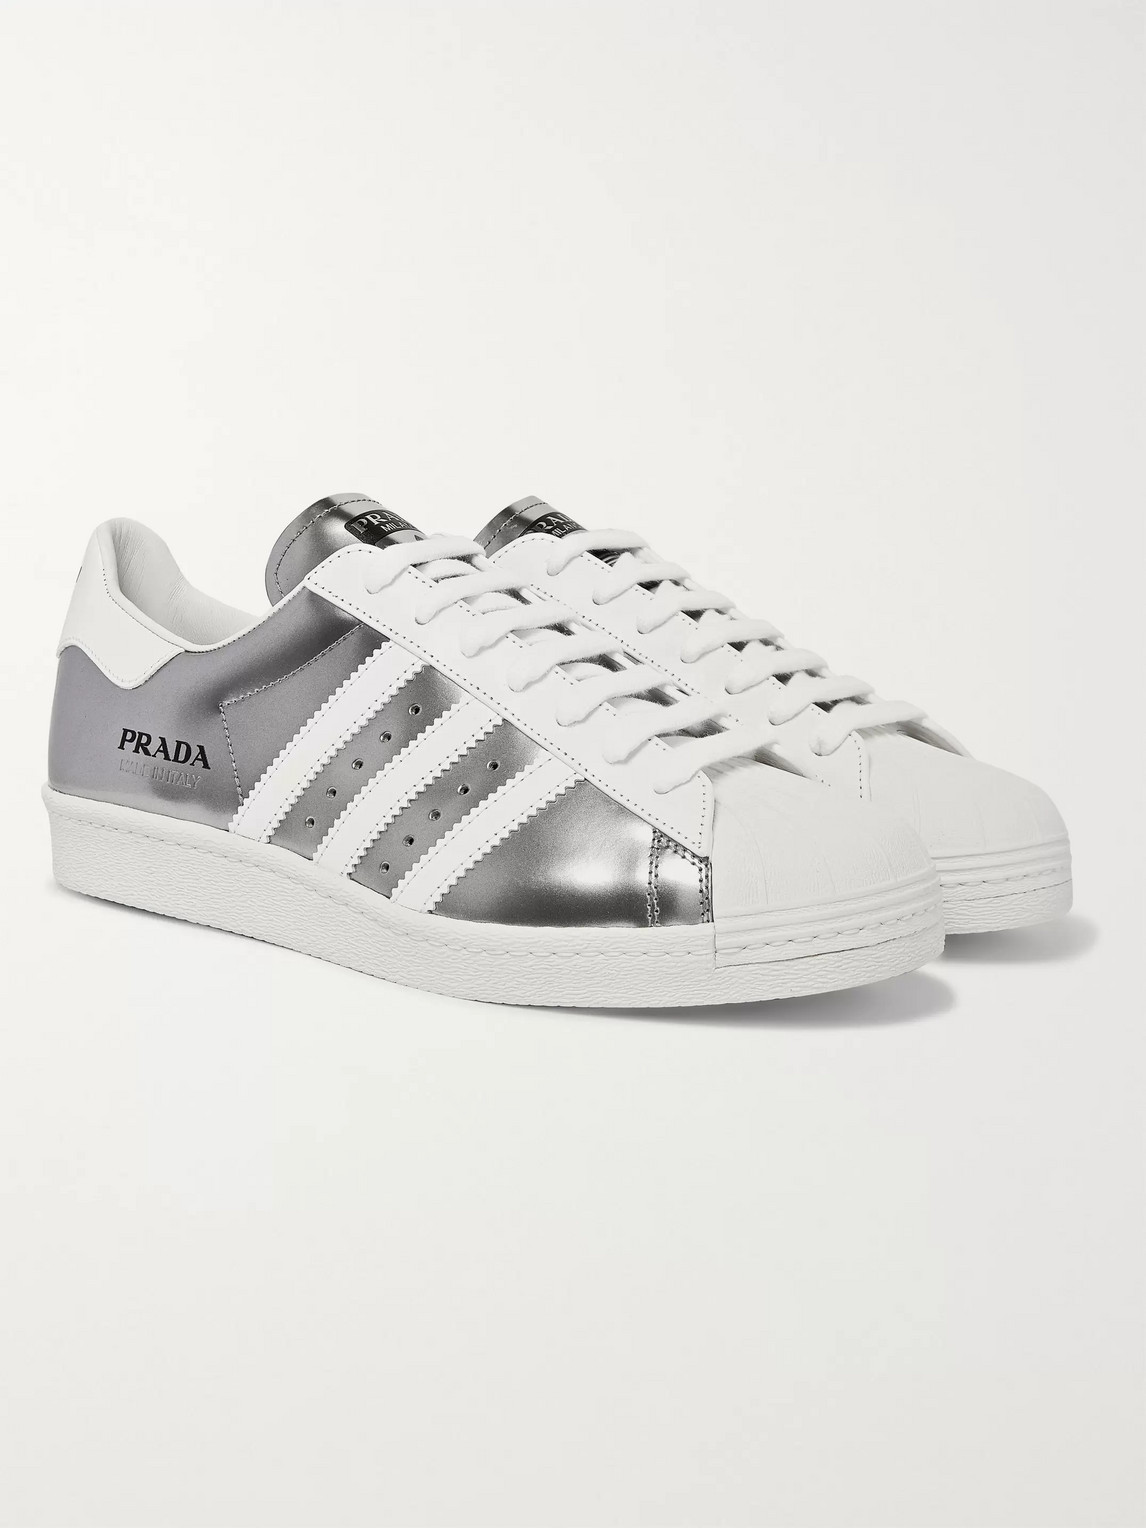 Adidas Consortium Prada Superstar 450 Metallic Leather Sneakers In Silver